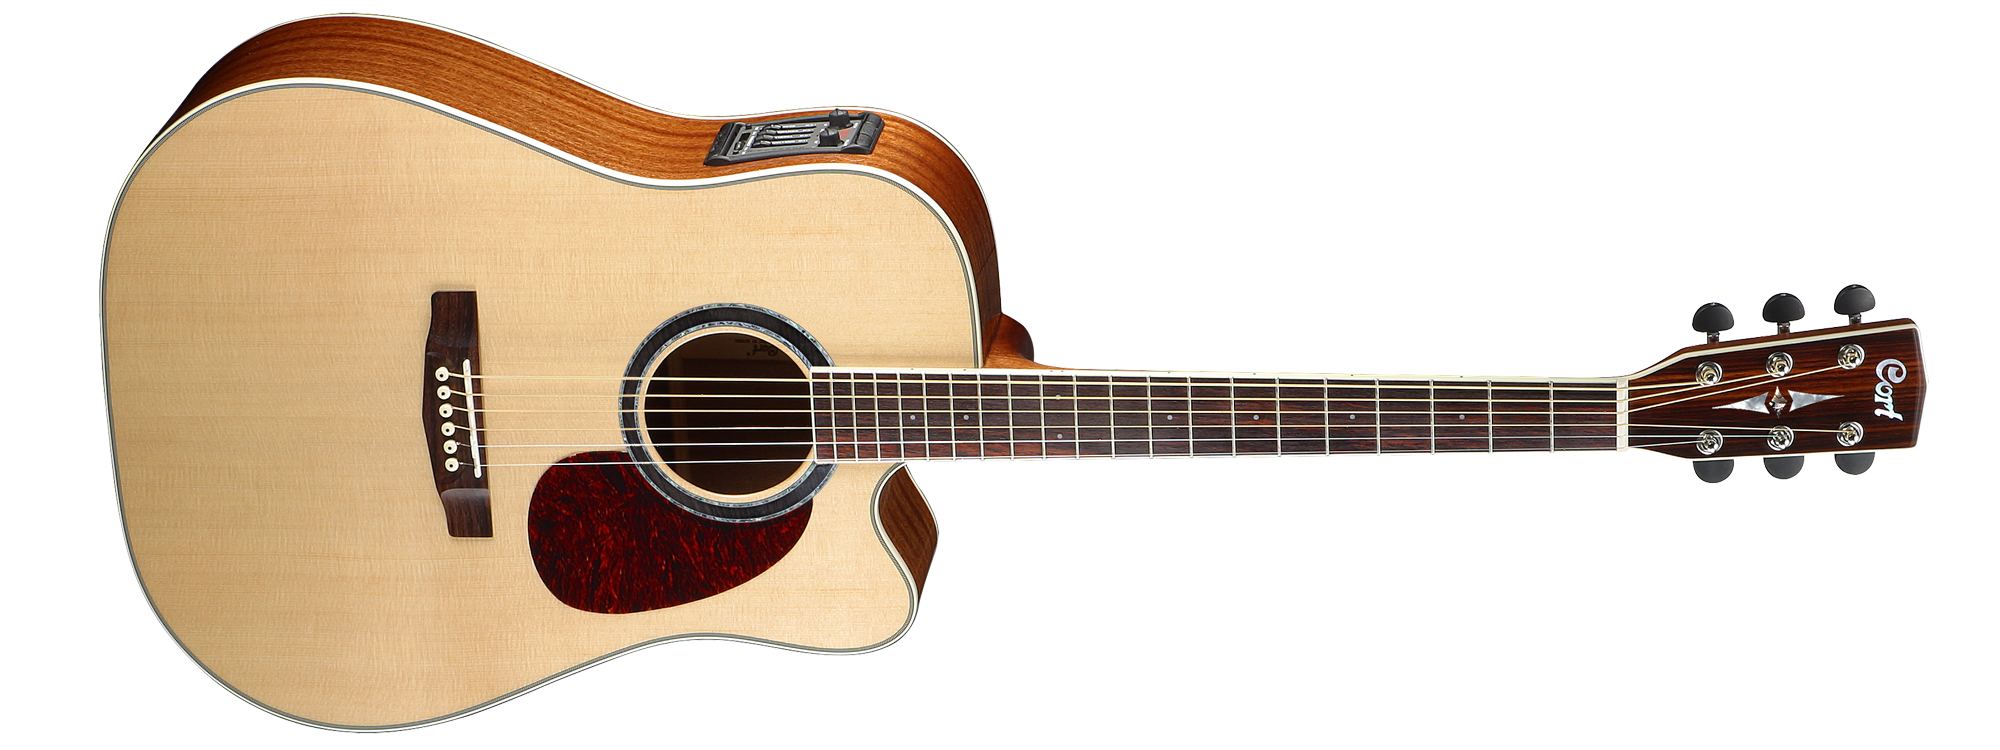 Cort MR730 FX Natural, Electro Acoustic Guitar for sale at Richards Guitars.